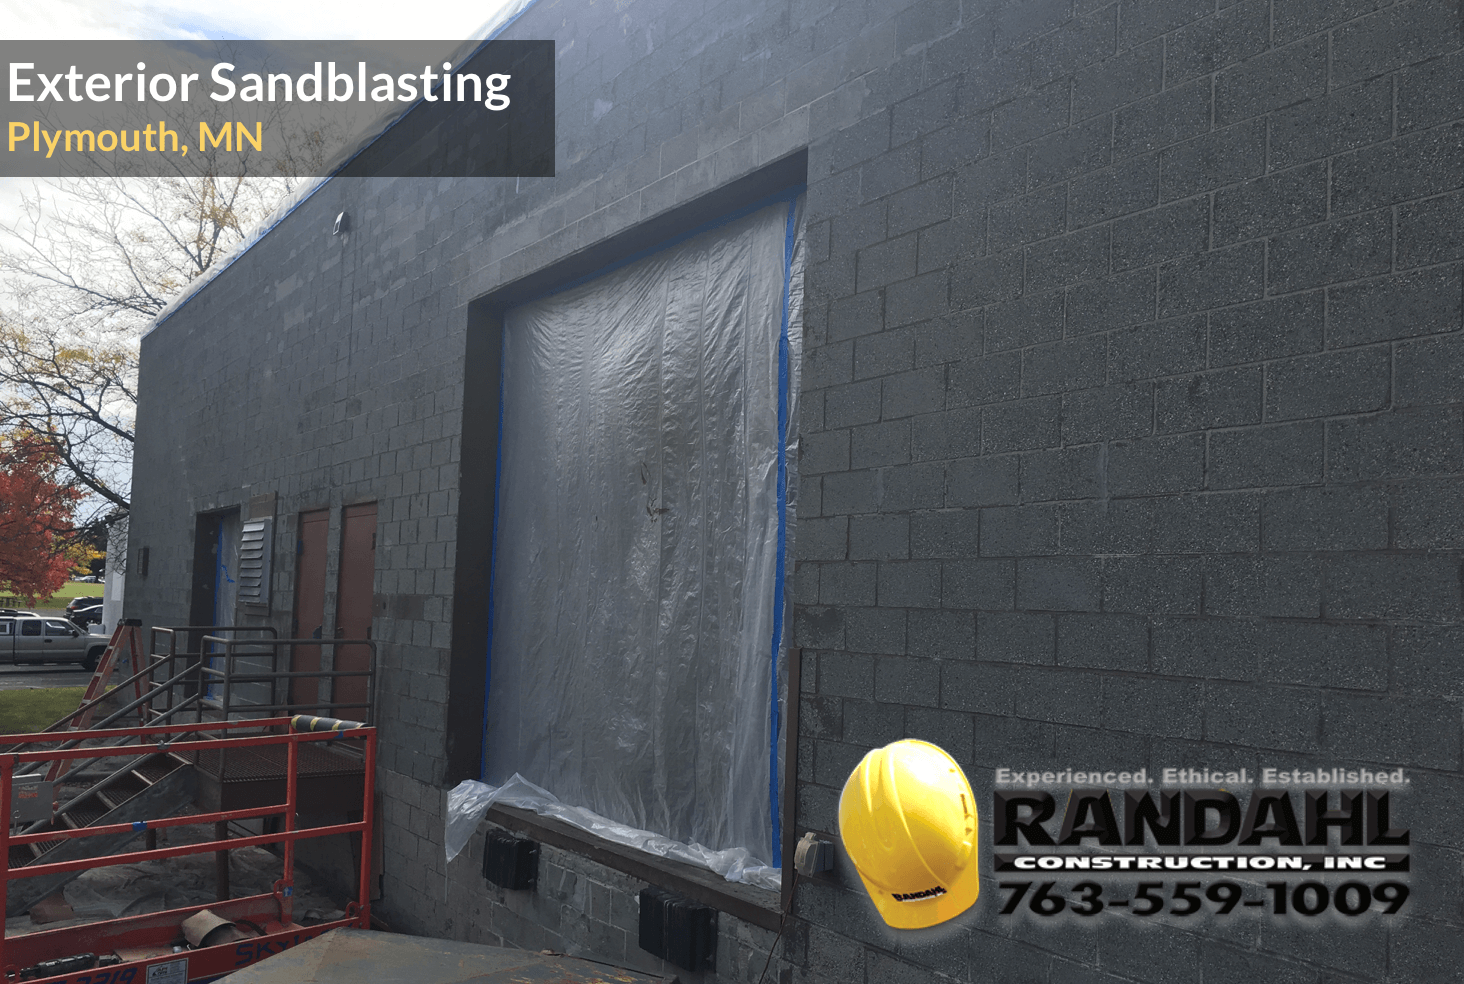 exterior sandblasting contractor